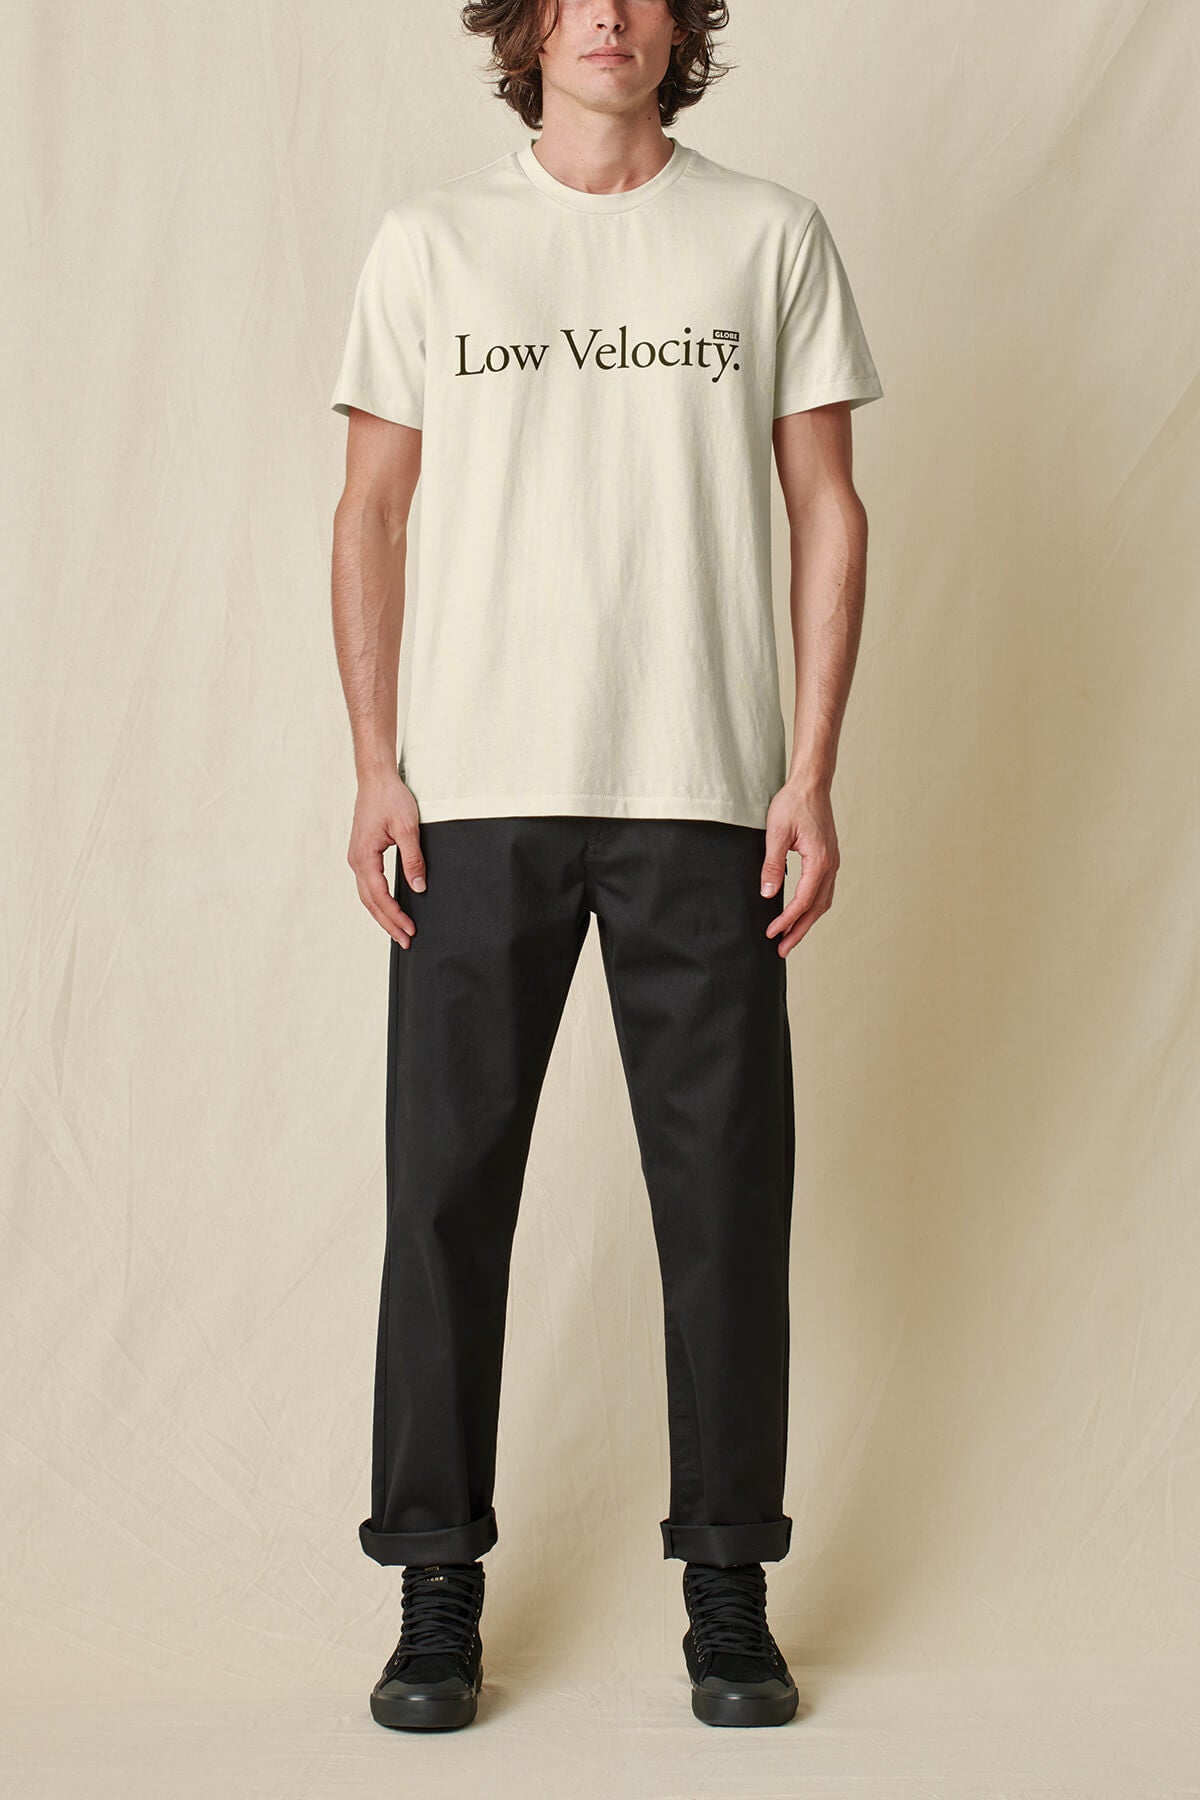 T-shirt Globe LV Tee sans javel - sans teinture